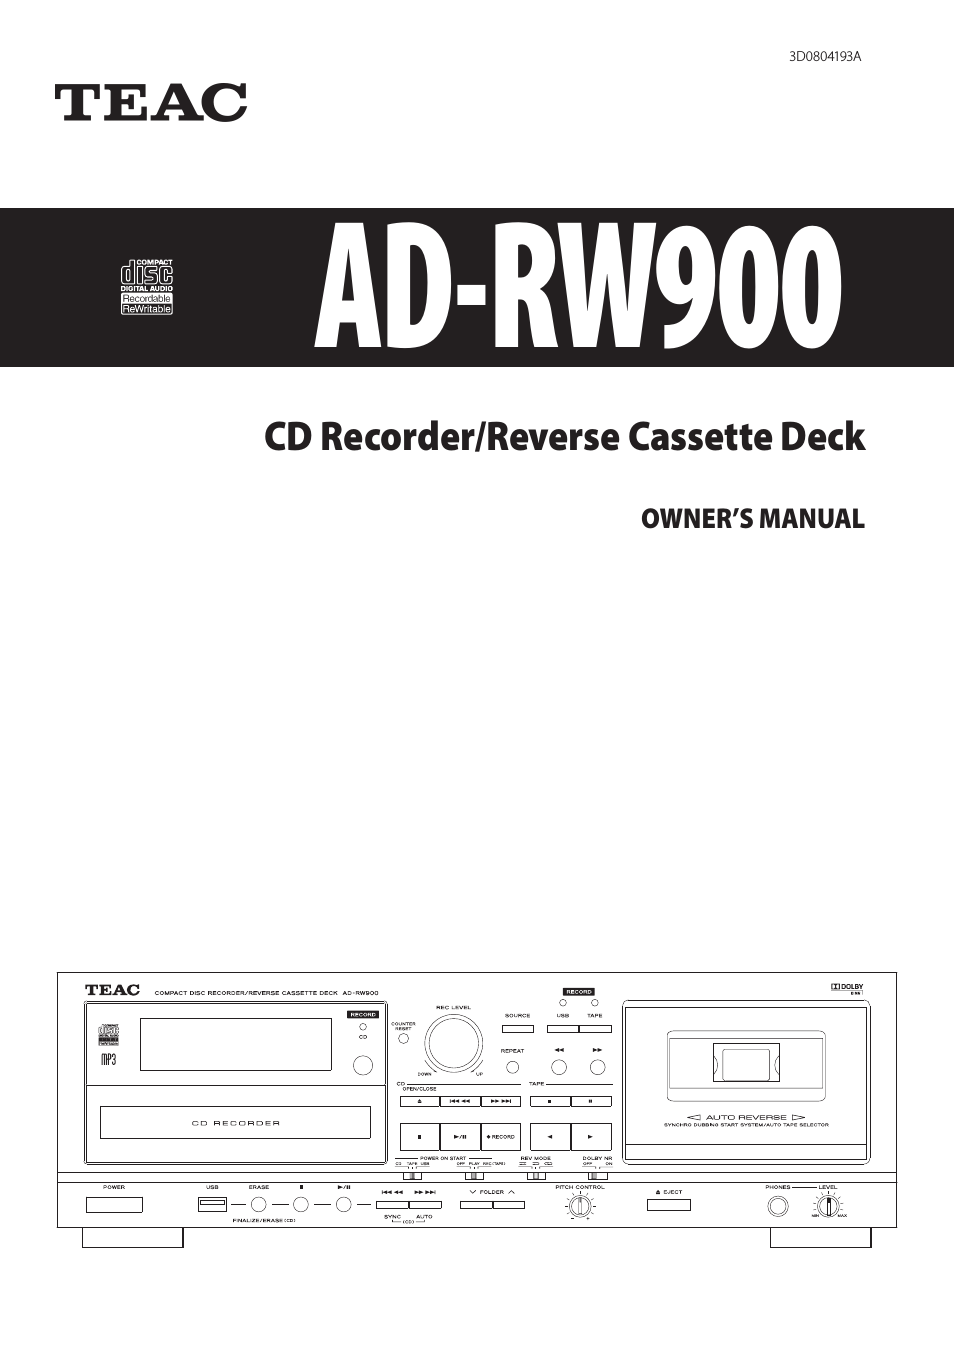 CD Recorder/Reverse Cassette Deck AD-RW900